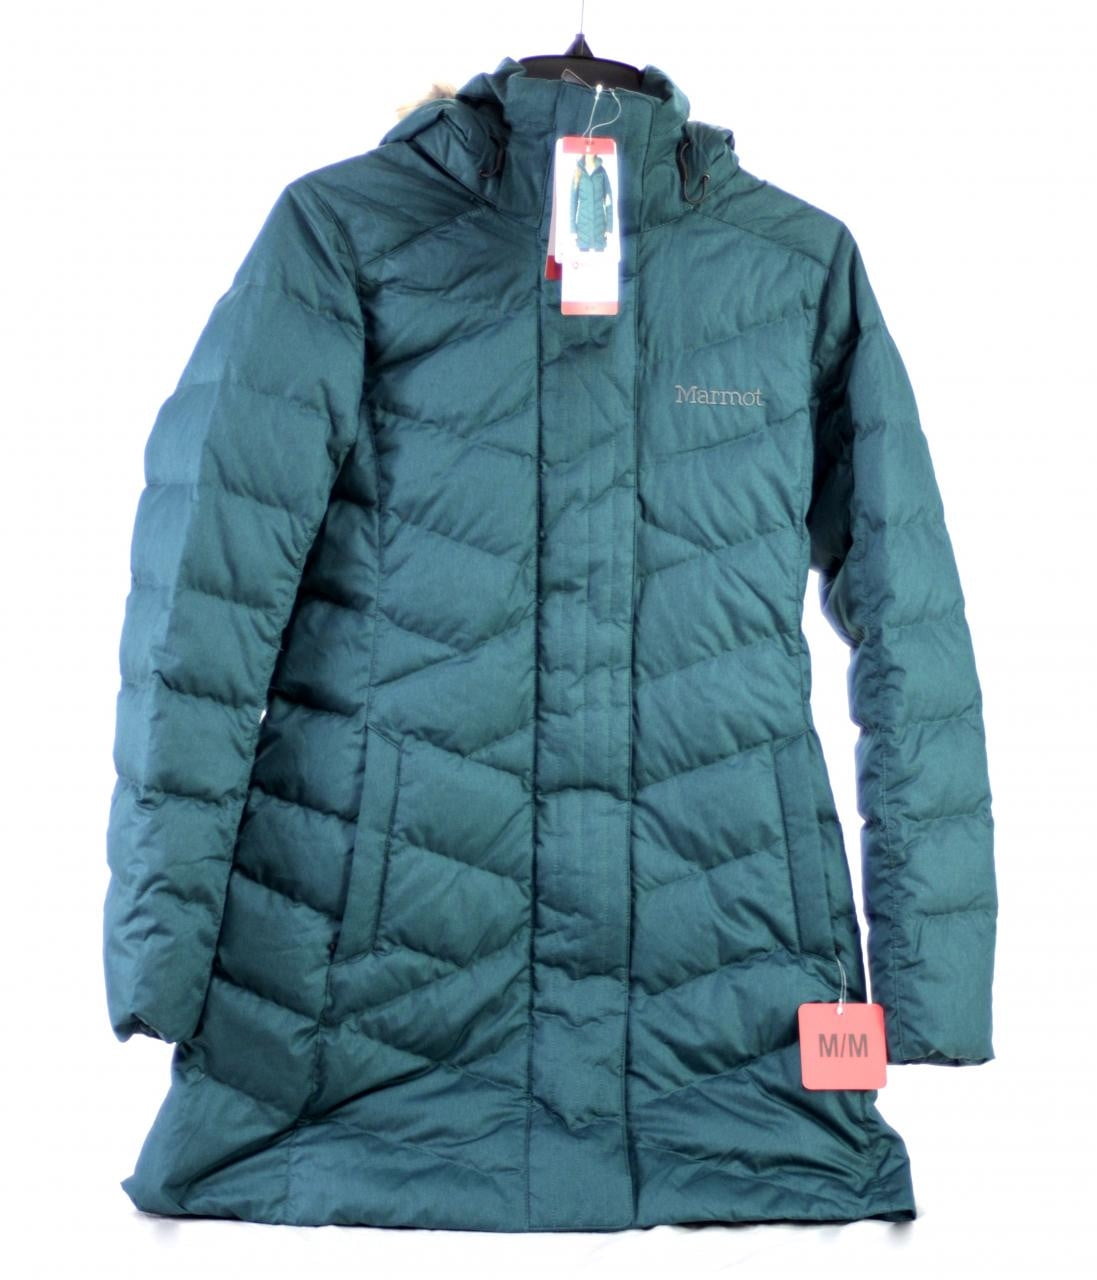 Marmot Women's Medium Deep Teal Turquoise Long Down Jacket | Walmart Canada